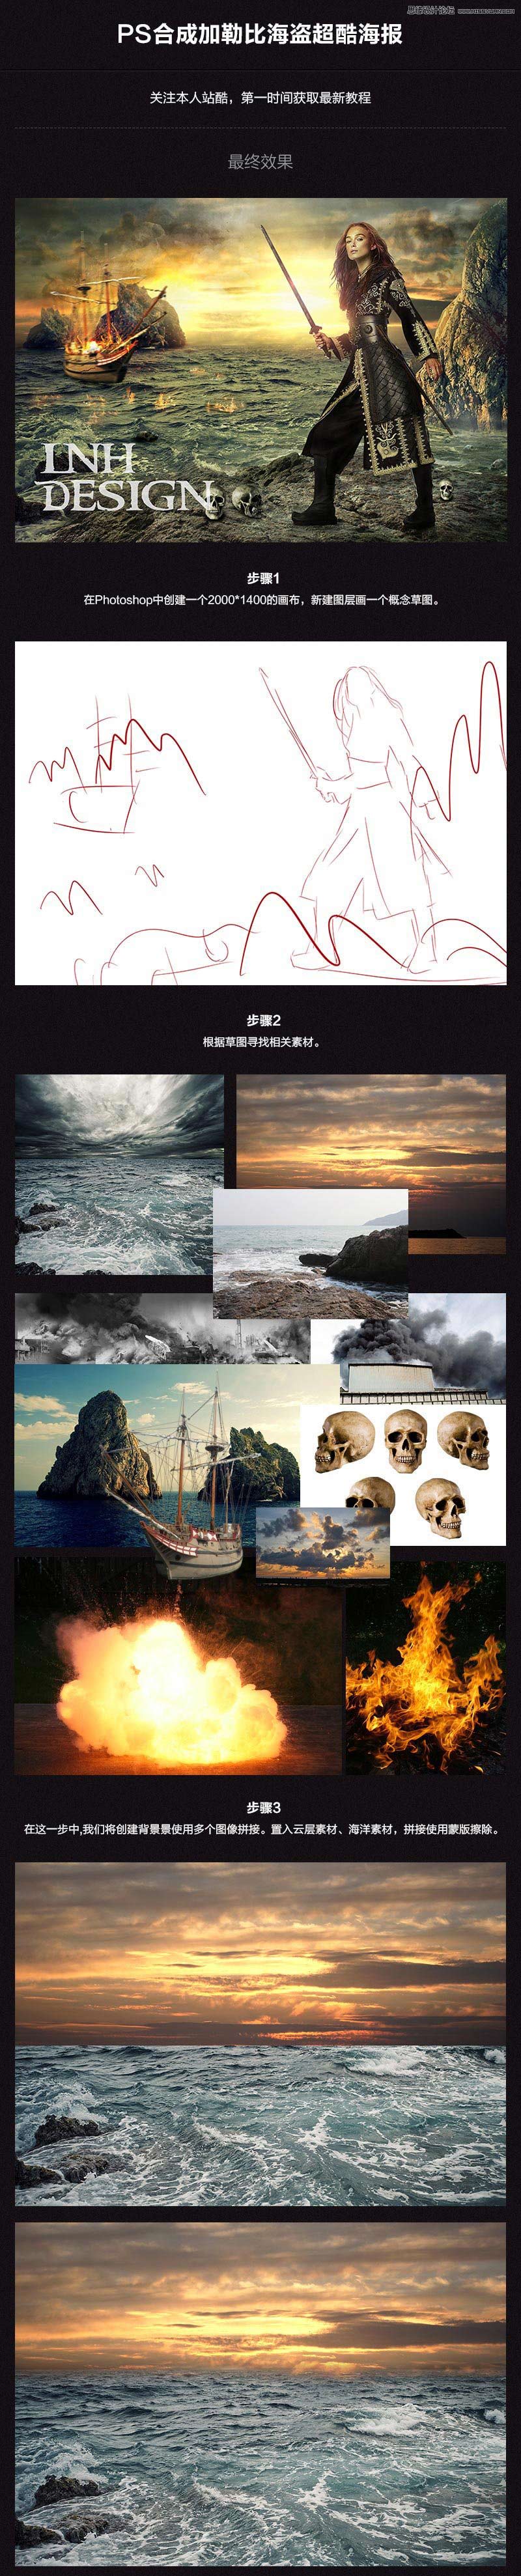 Photoshop合成超炫的加勒比海盗电影海报教程